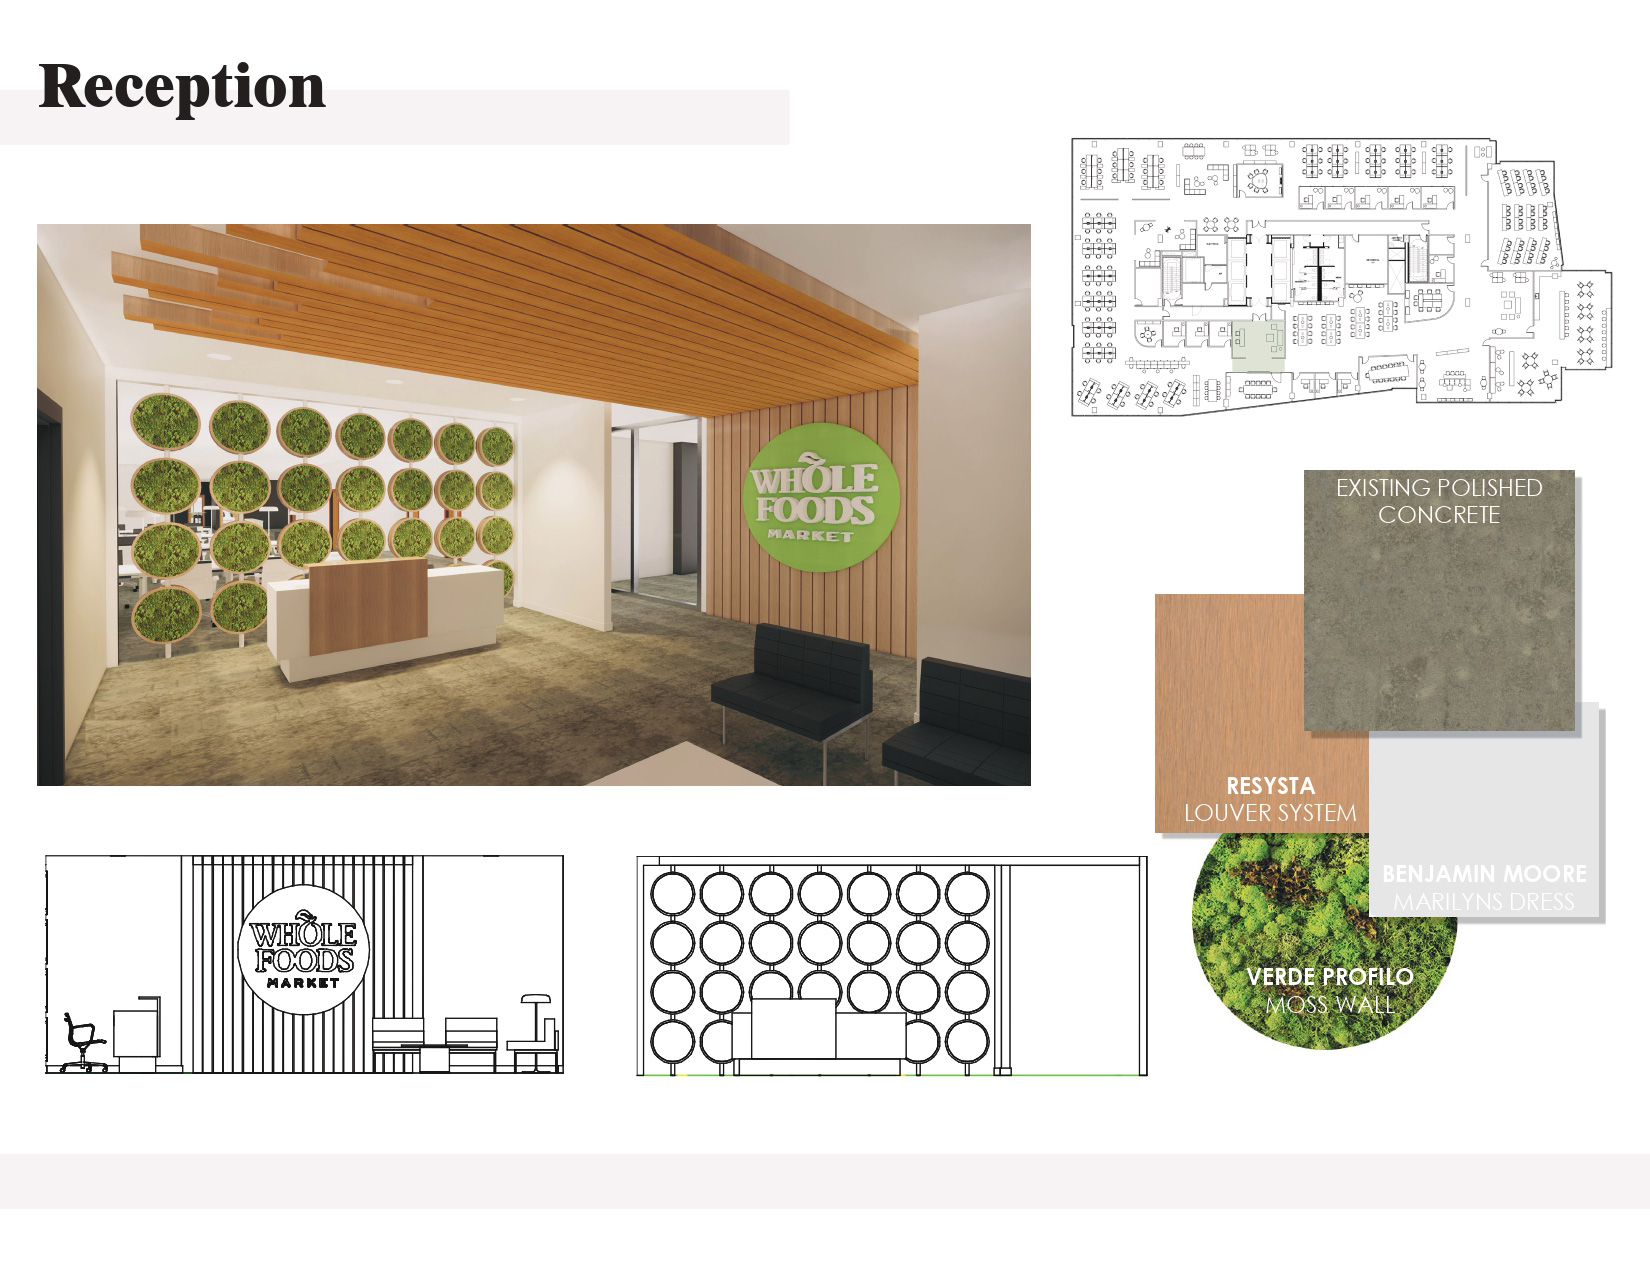 Floor plan and interior design for Reception area